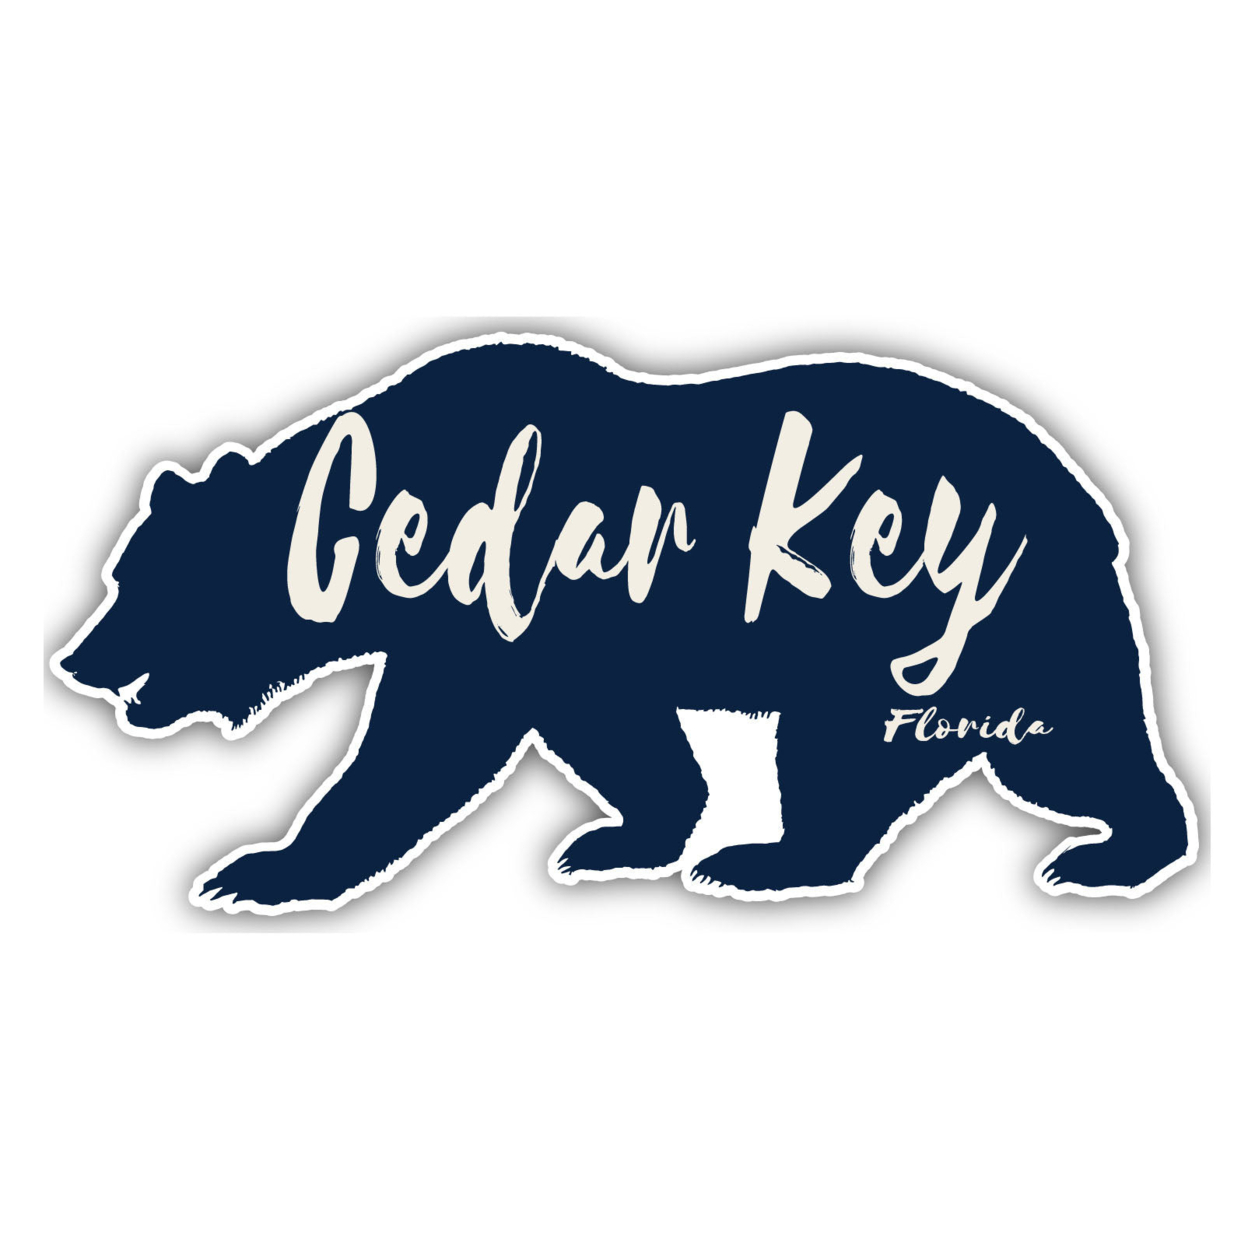 Cedar Key Florida Souvenir Decorative Stickers (Choose Theme And Size) - 4-Pack, 4-Inch, Camp Life